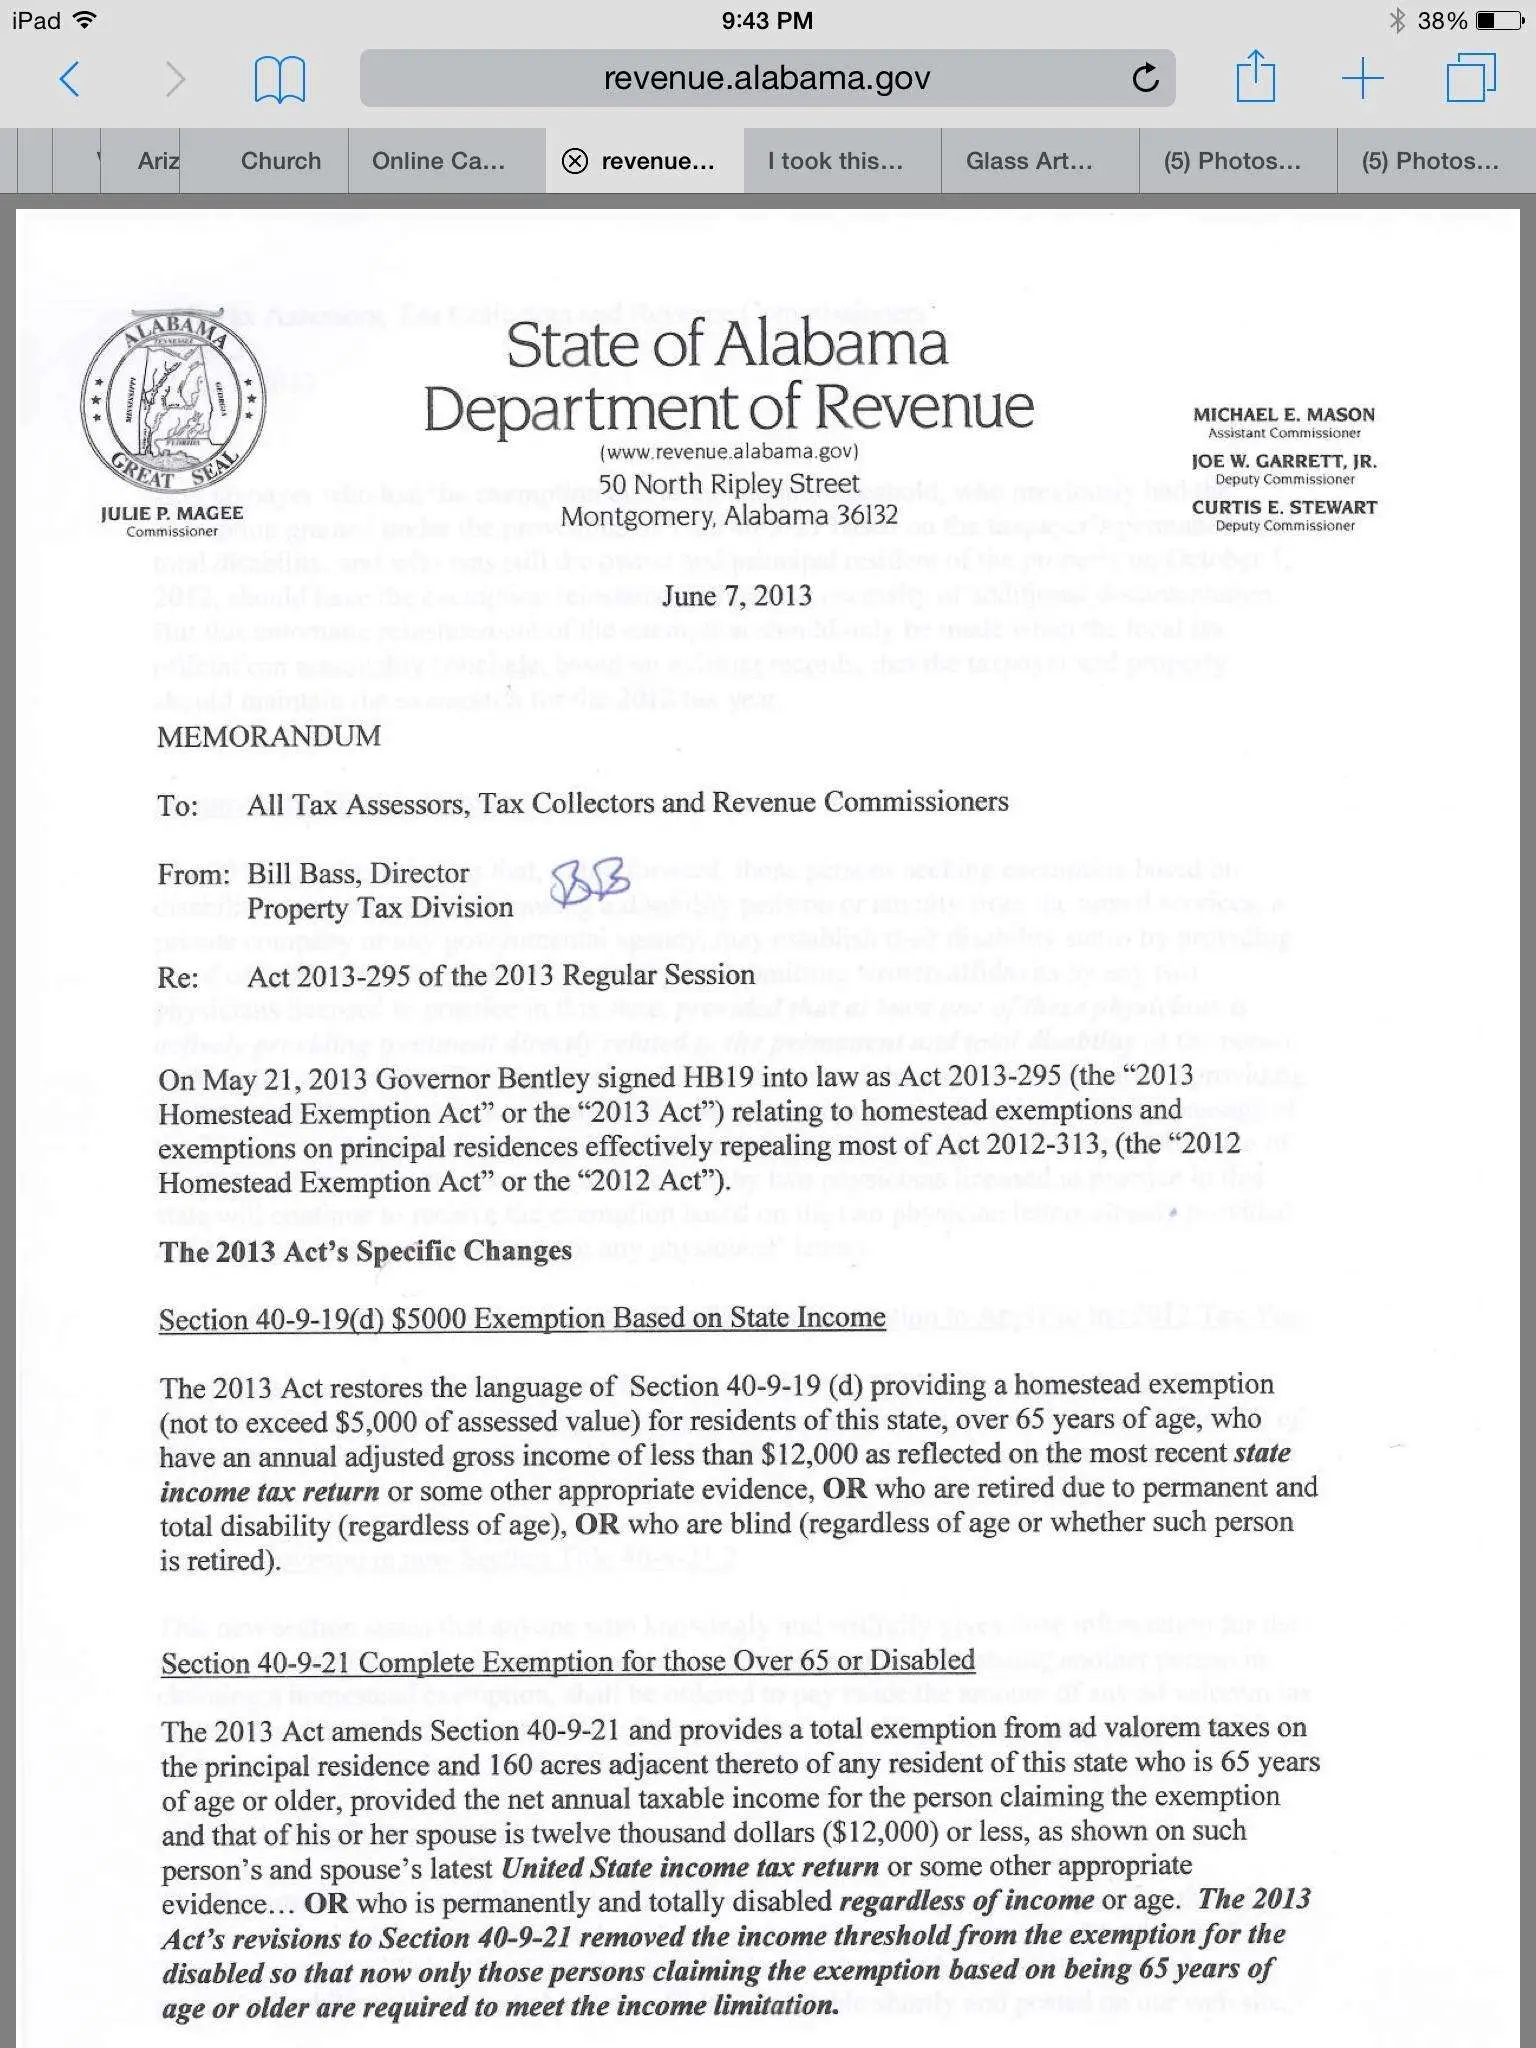 State Of Alabama Tax Refund Calendar :